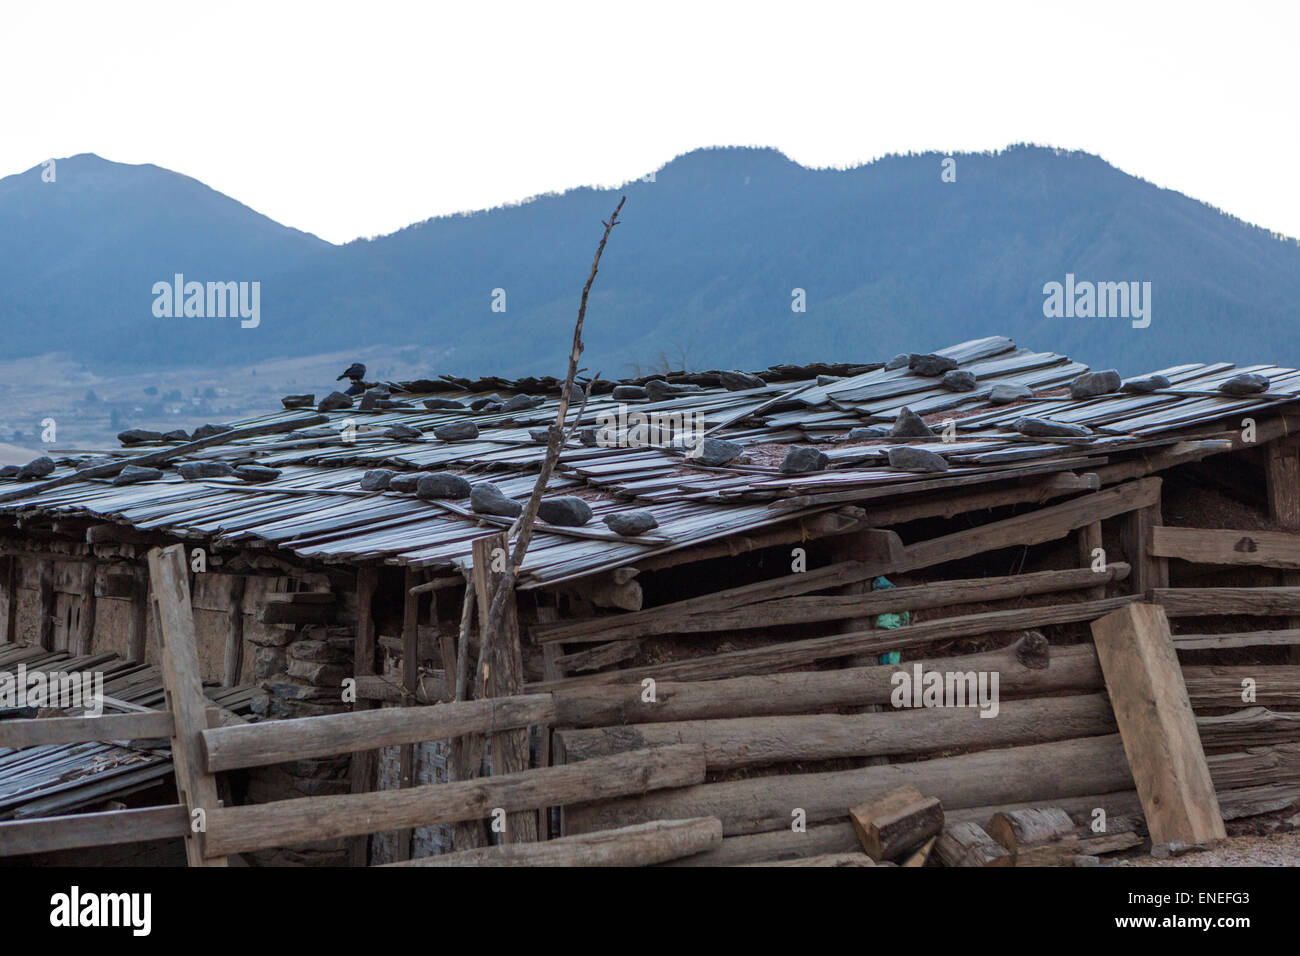 Farm shed roof held down with rocks, Phobjikha Valley, Western Bhutan, Asia Stock Photo